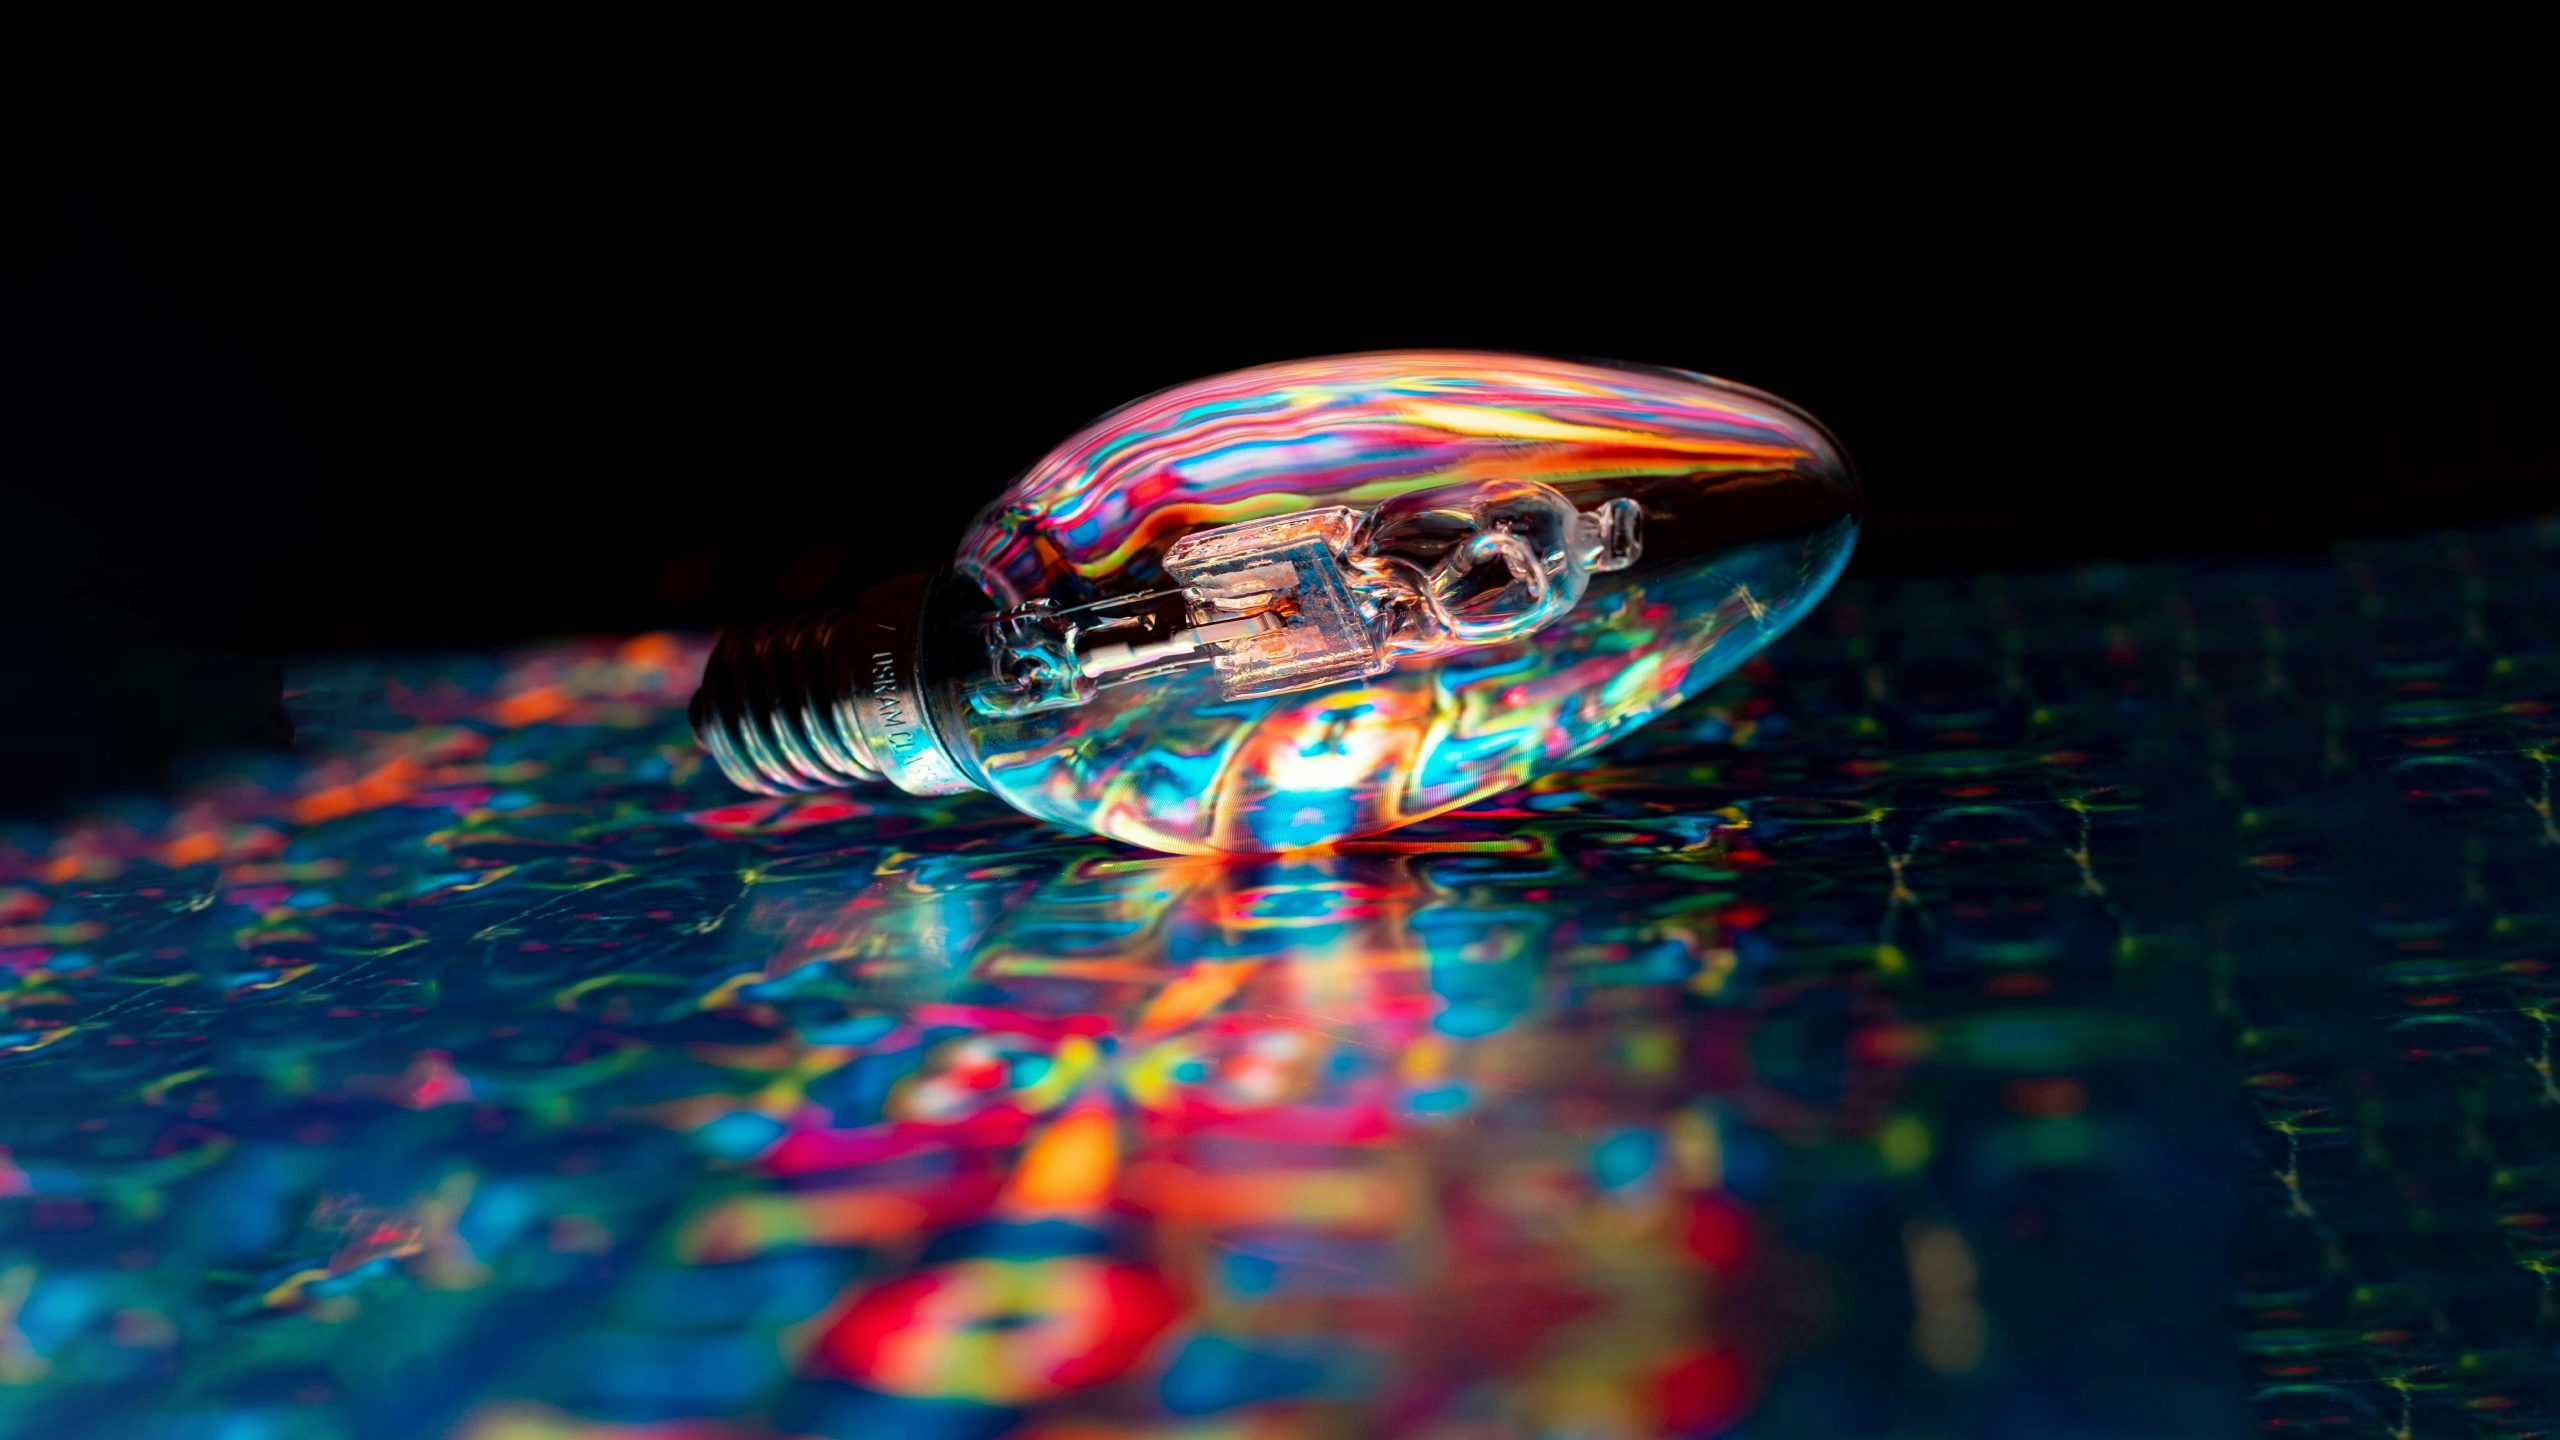 iridescent hued lightbulb on its side 